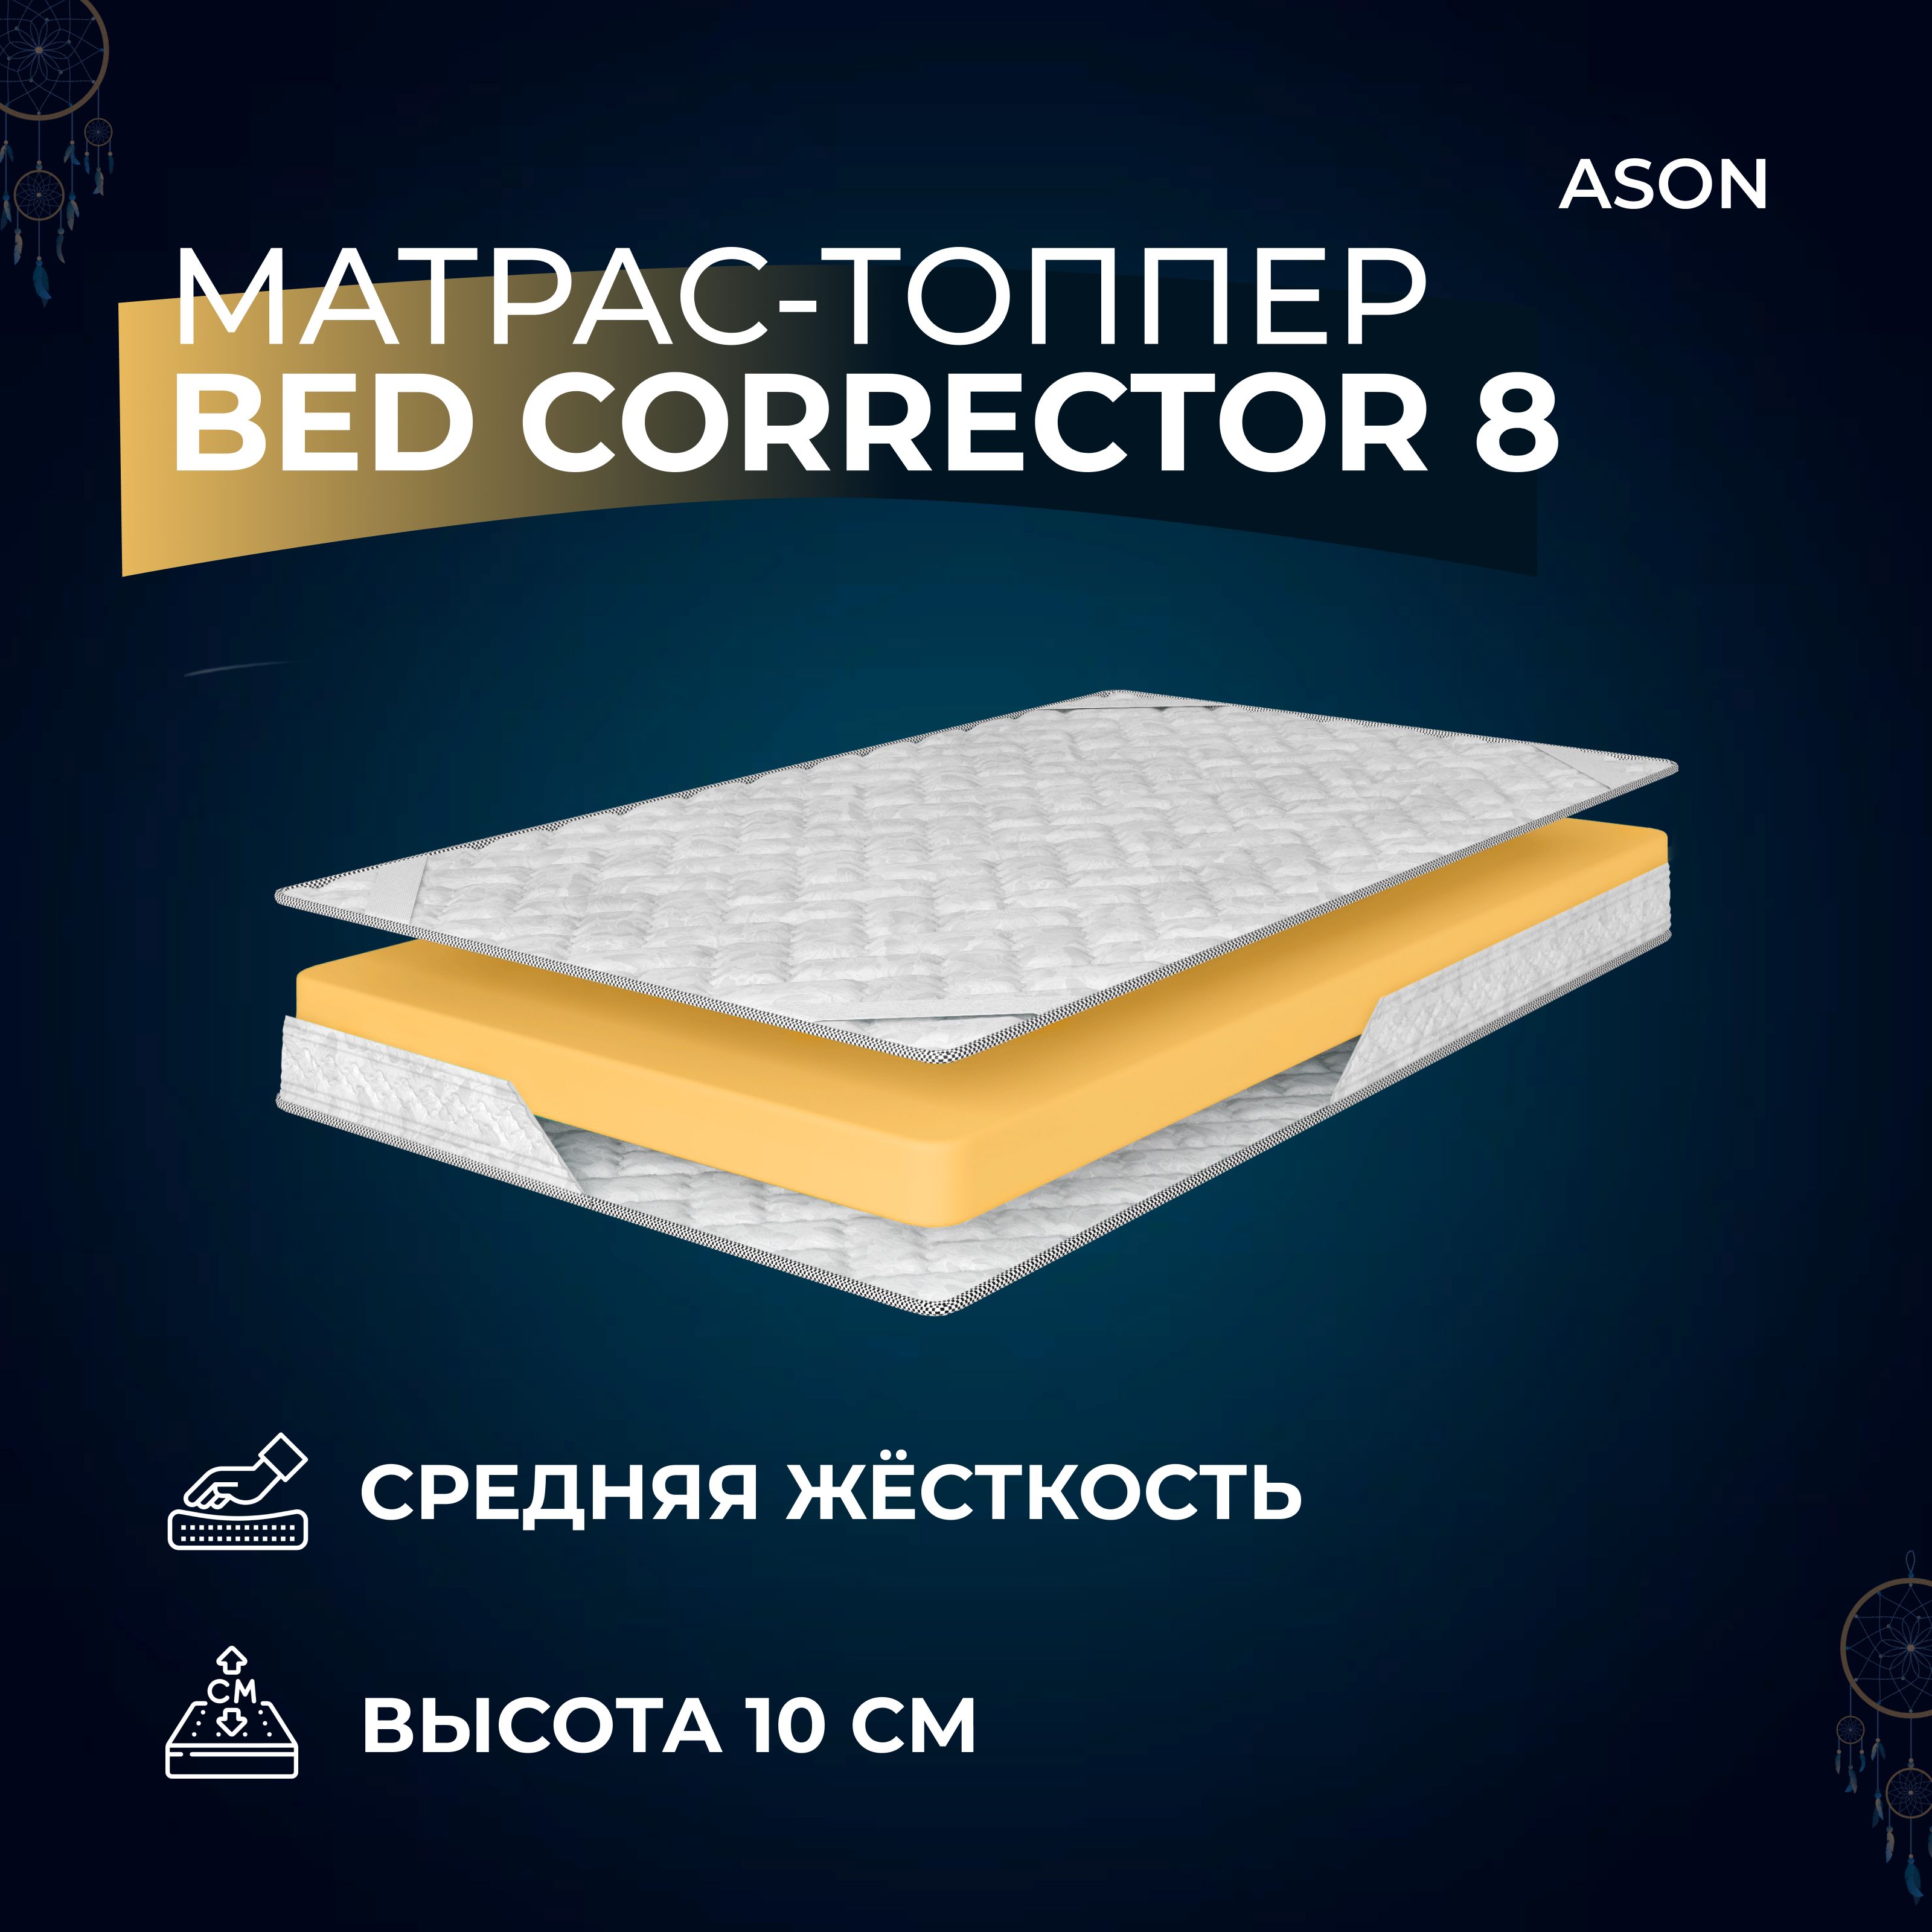 Матрас-топпер 185х200 Ason, Bed corrector 8